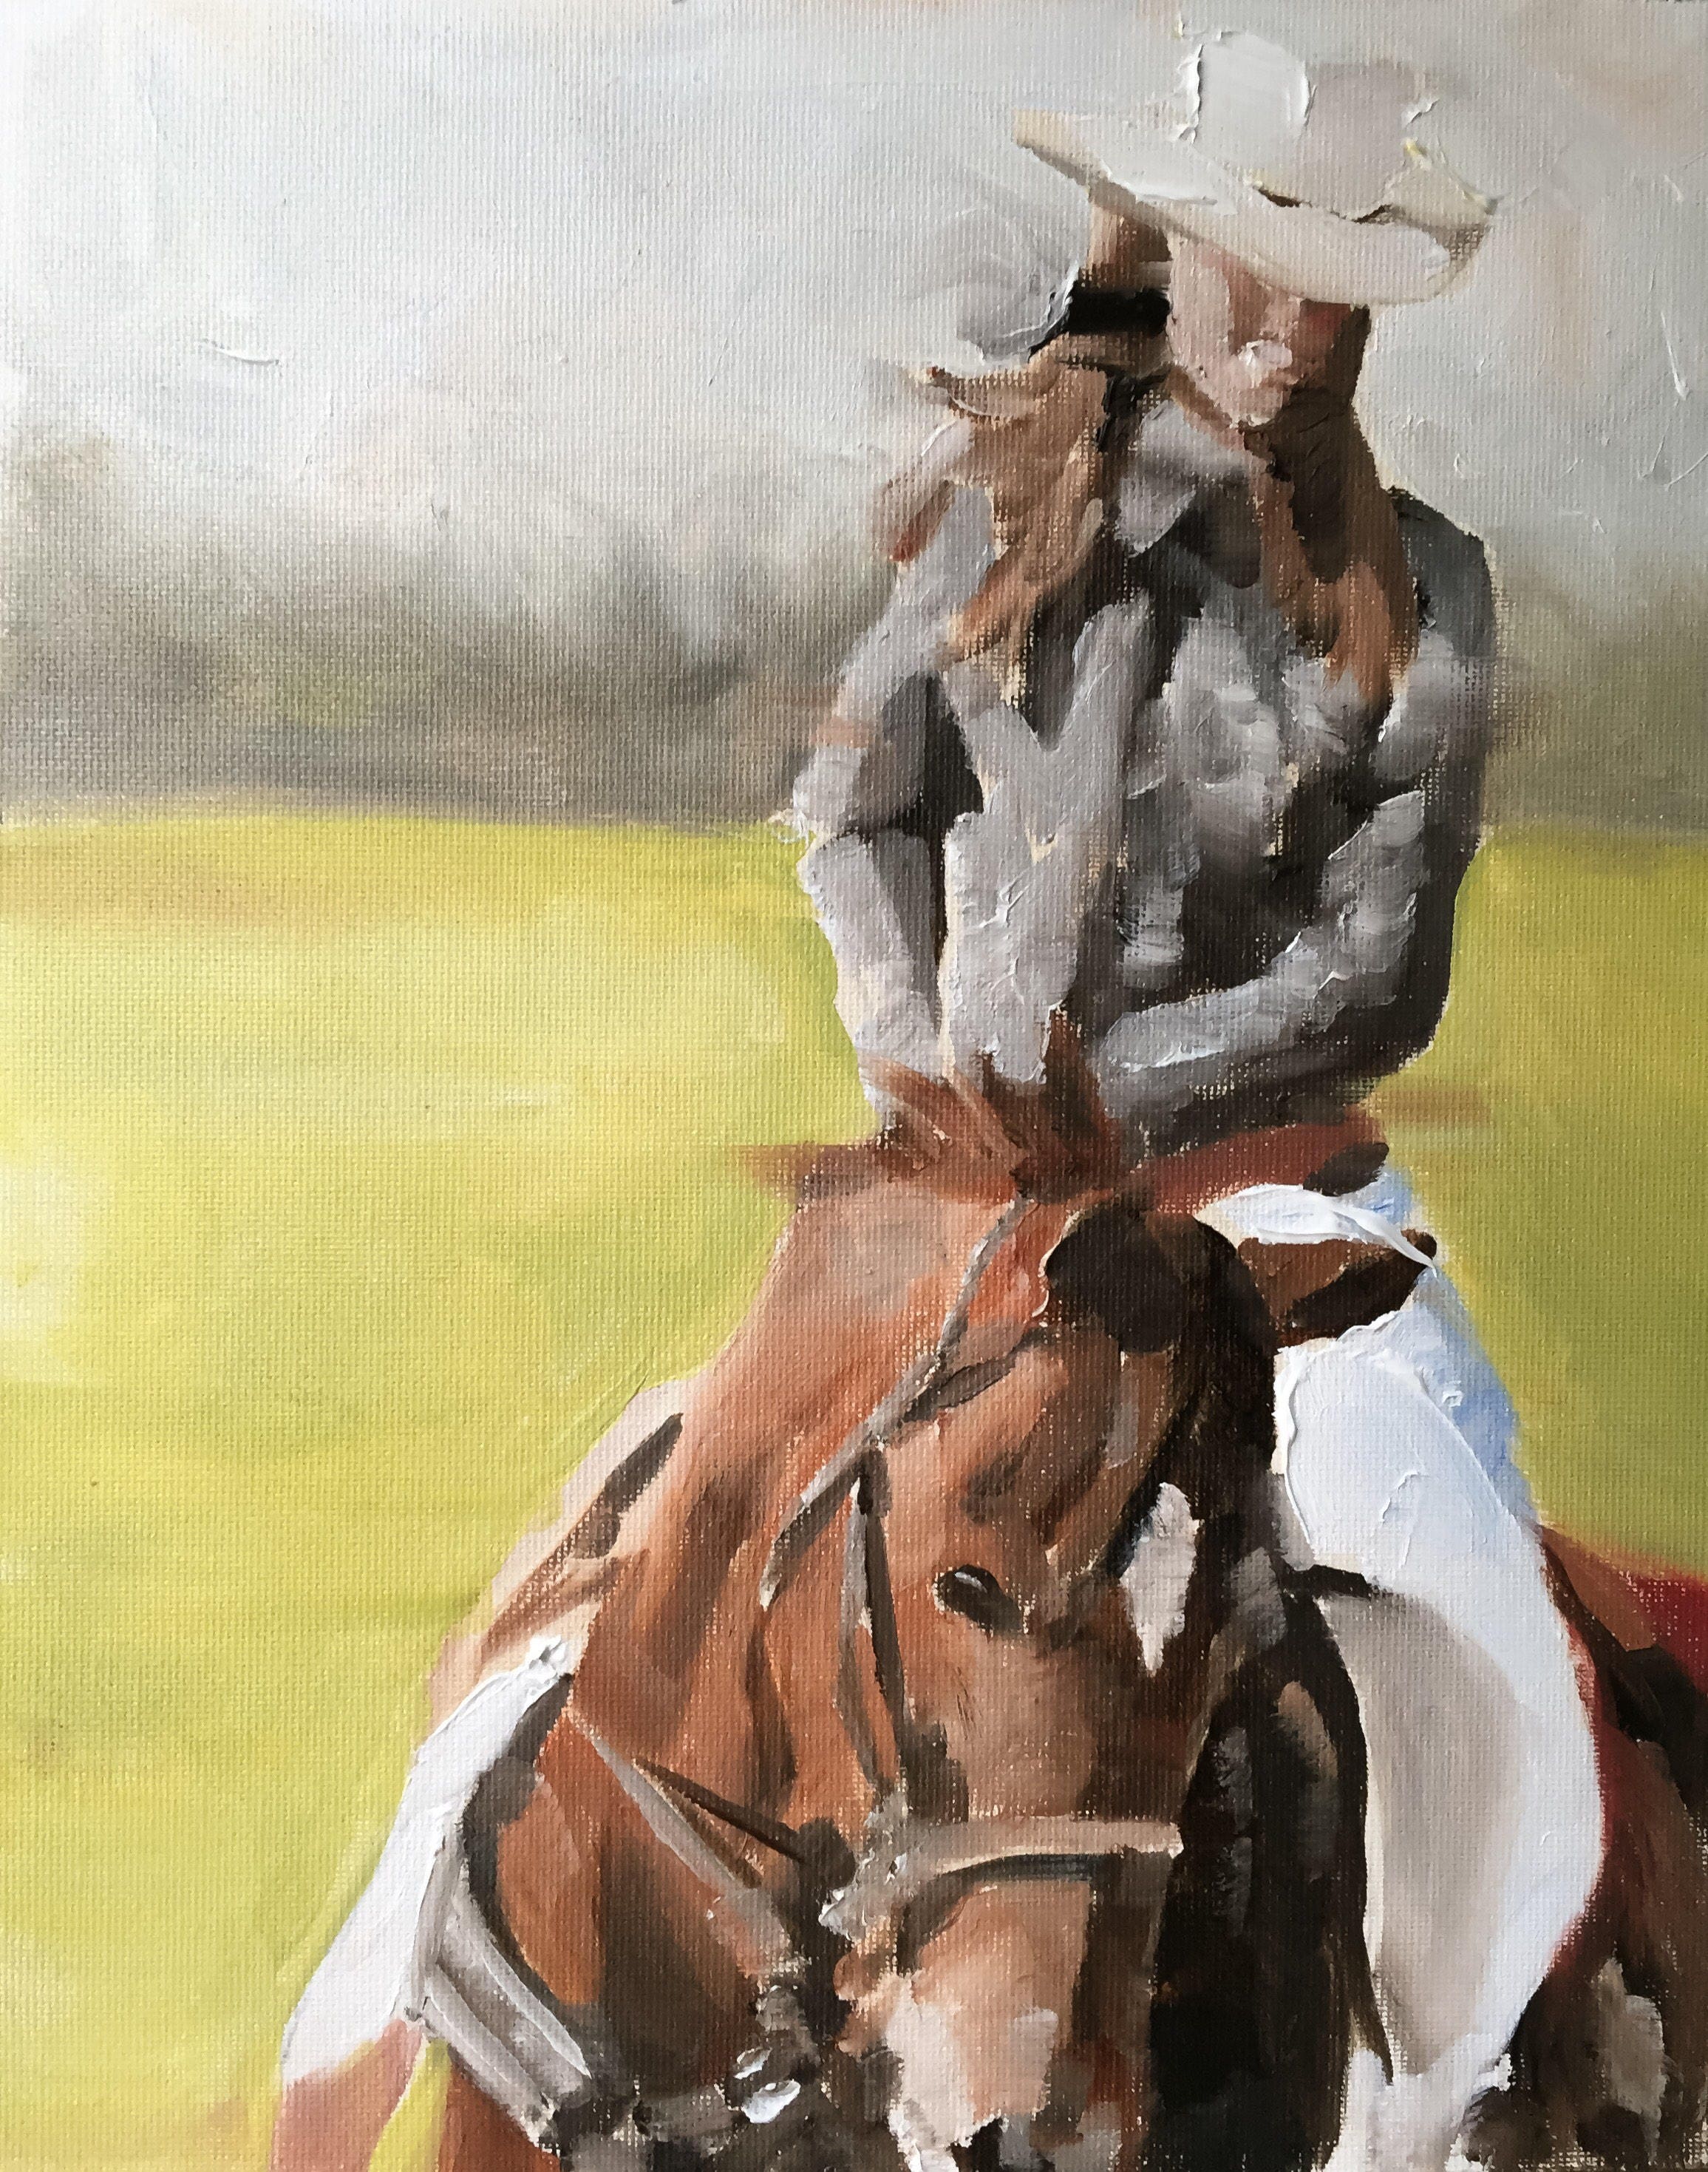 The horse rider